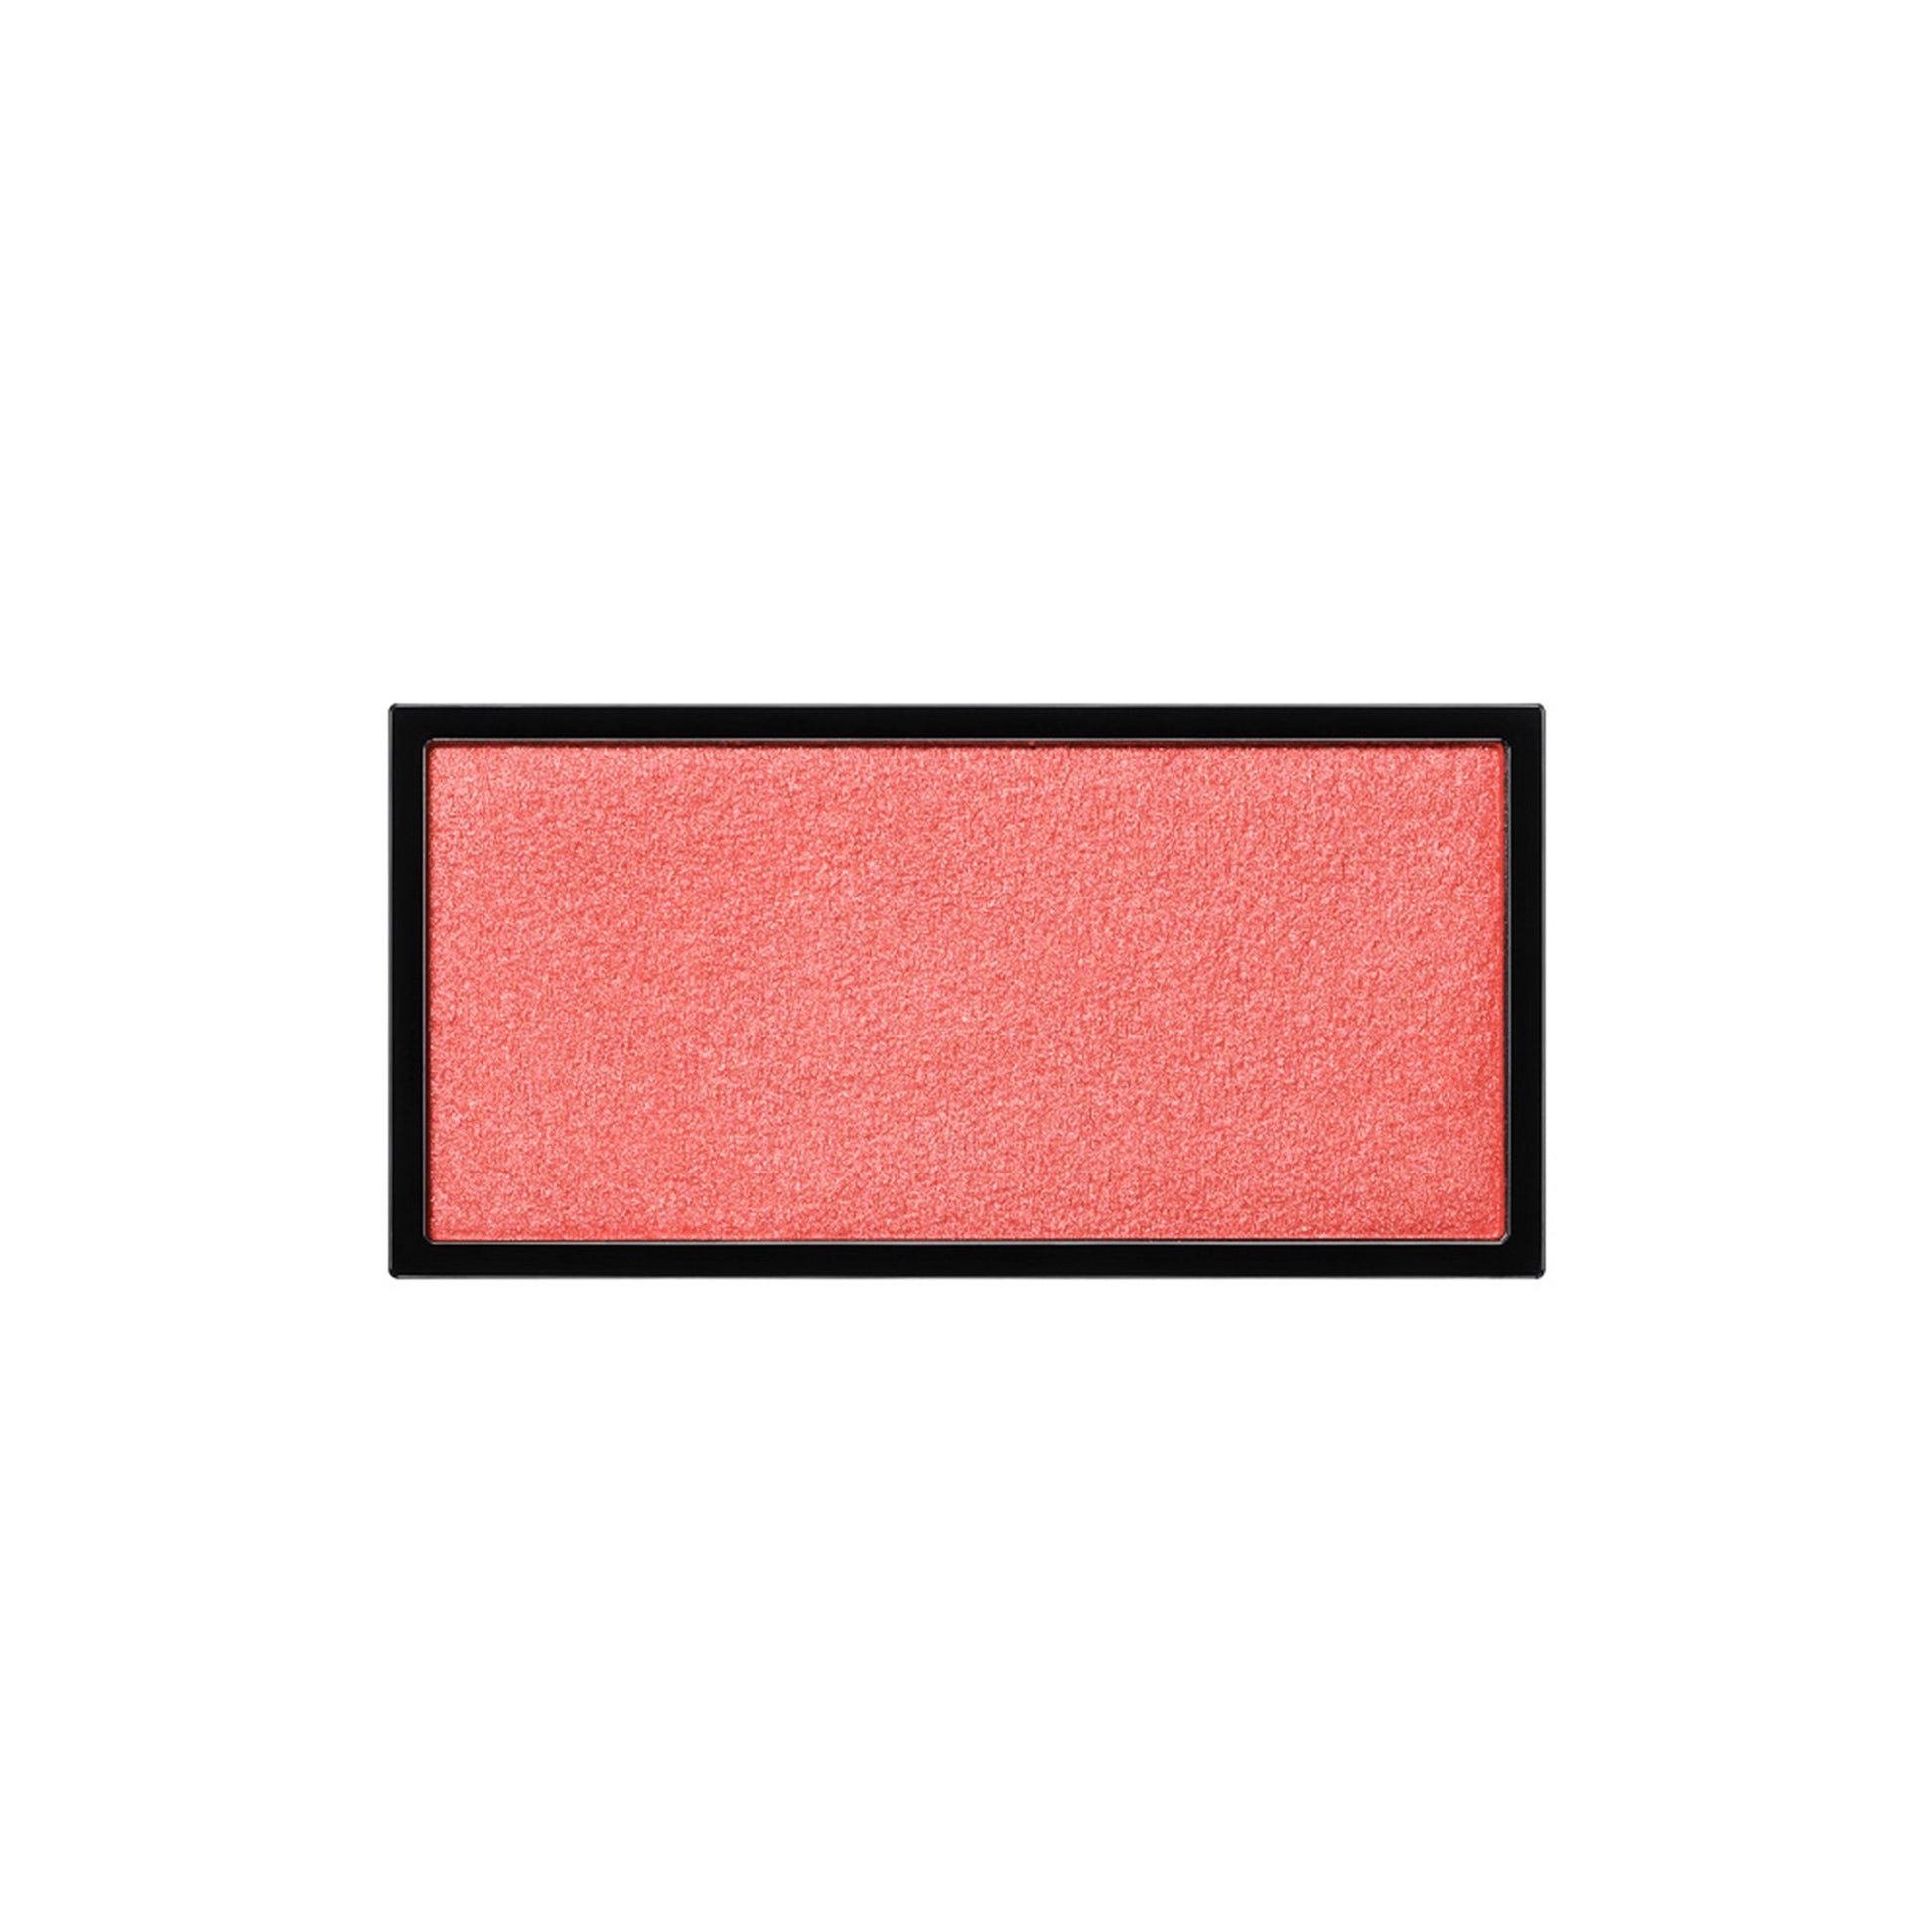 A rectangle shaped powder blush pan in a reddish-orange